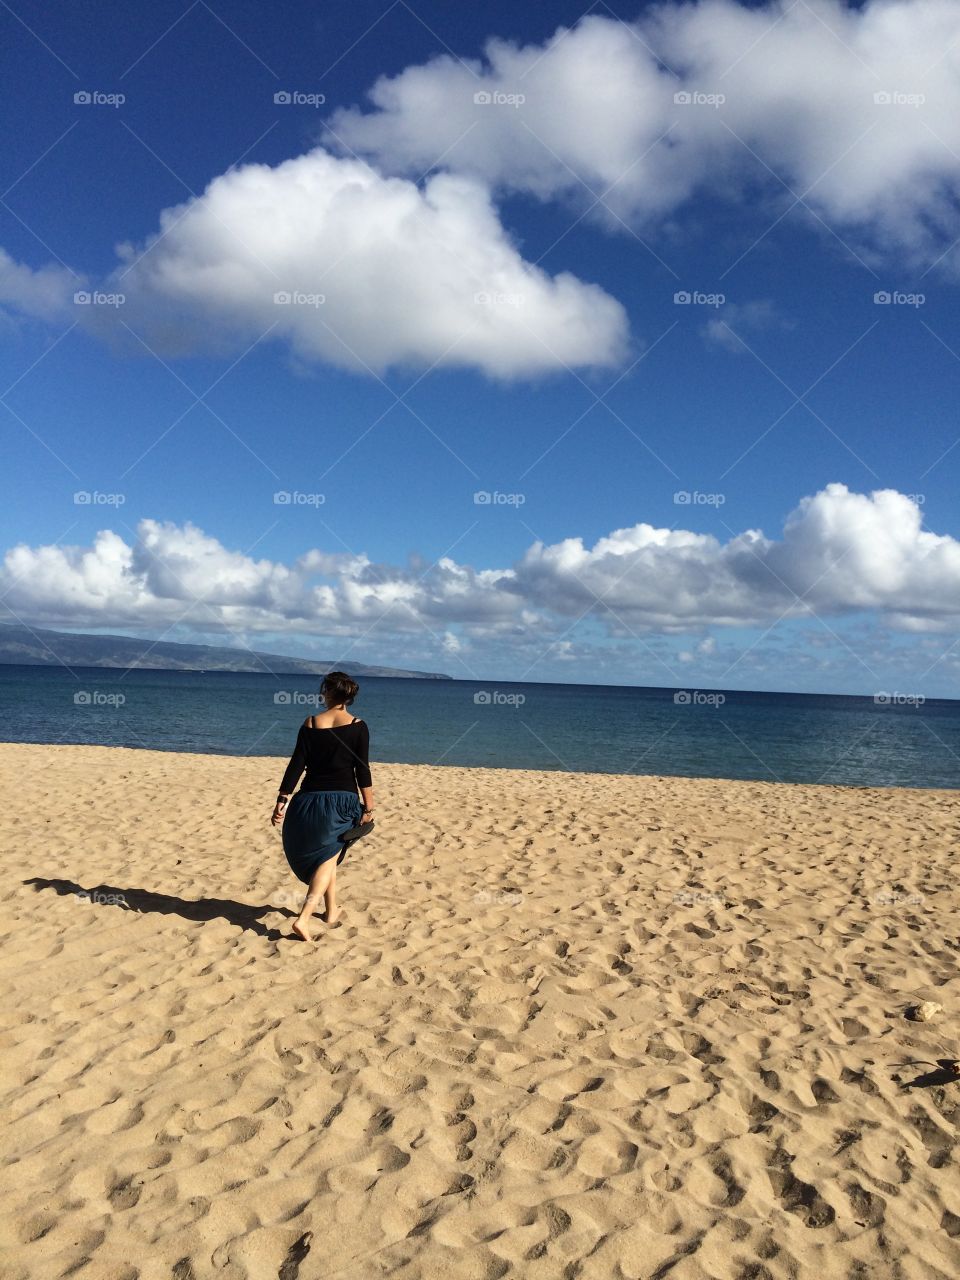 Walking the beach in Maui